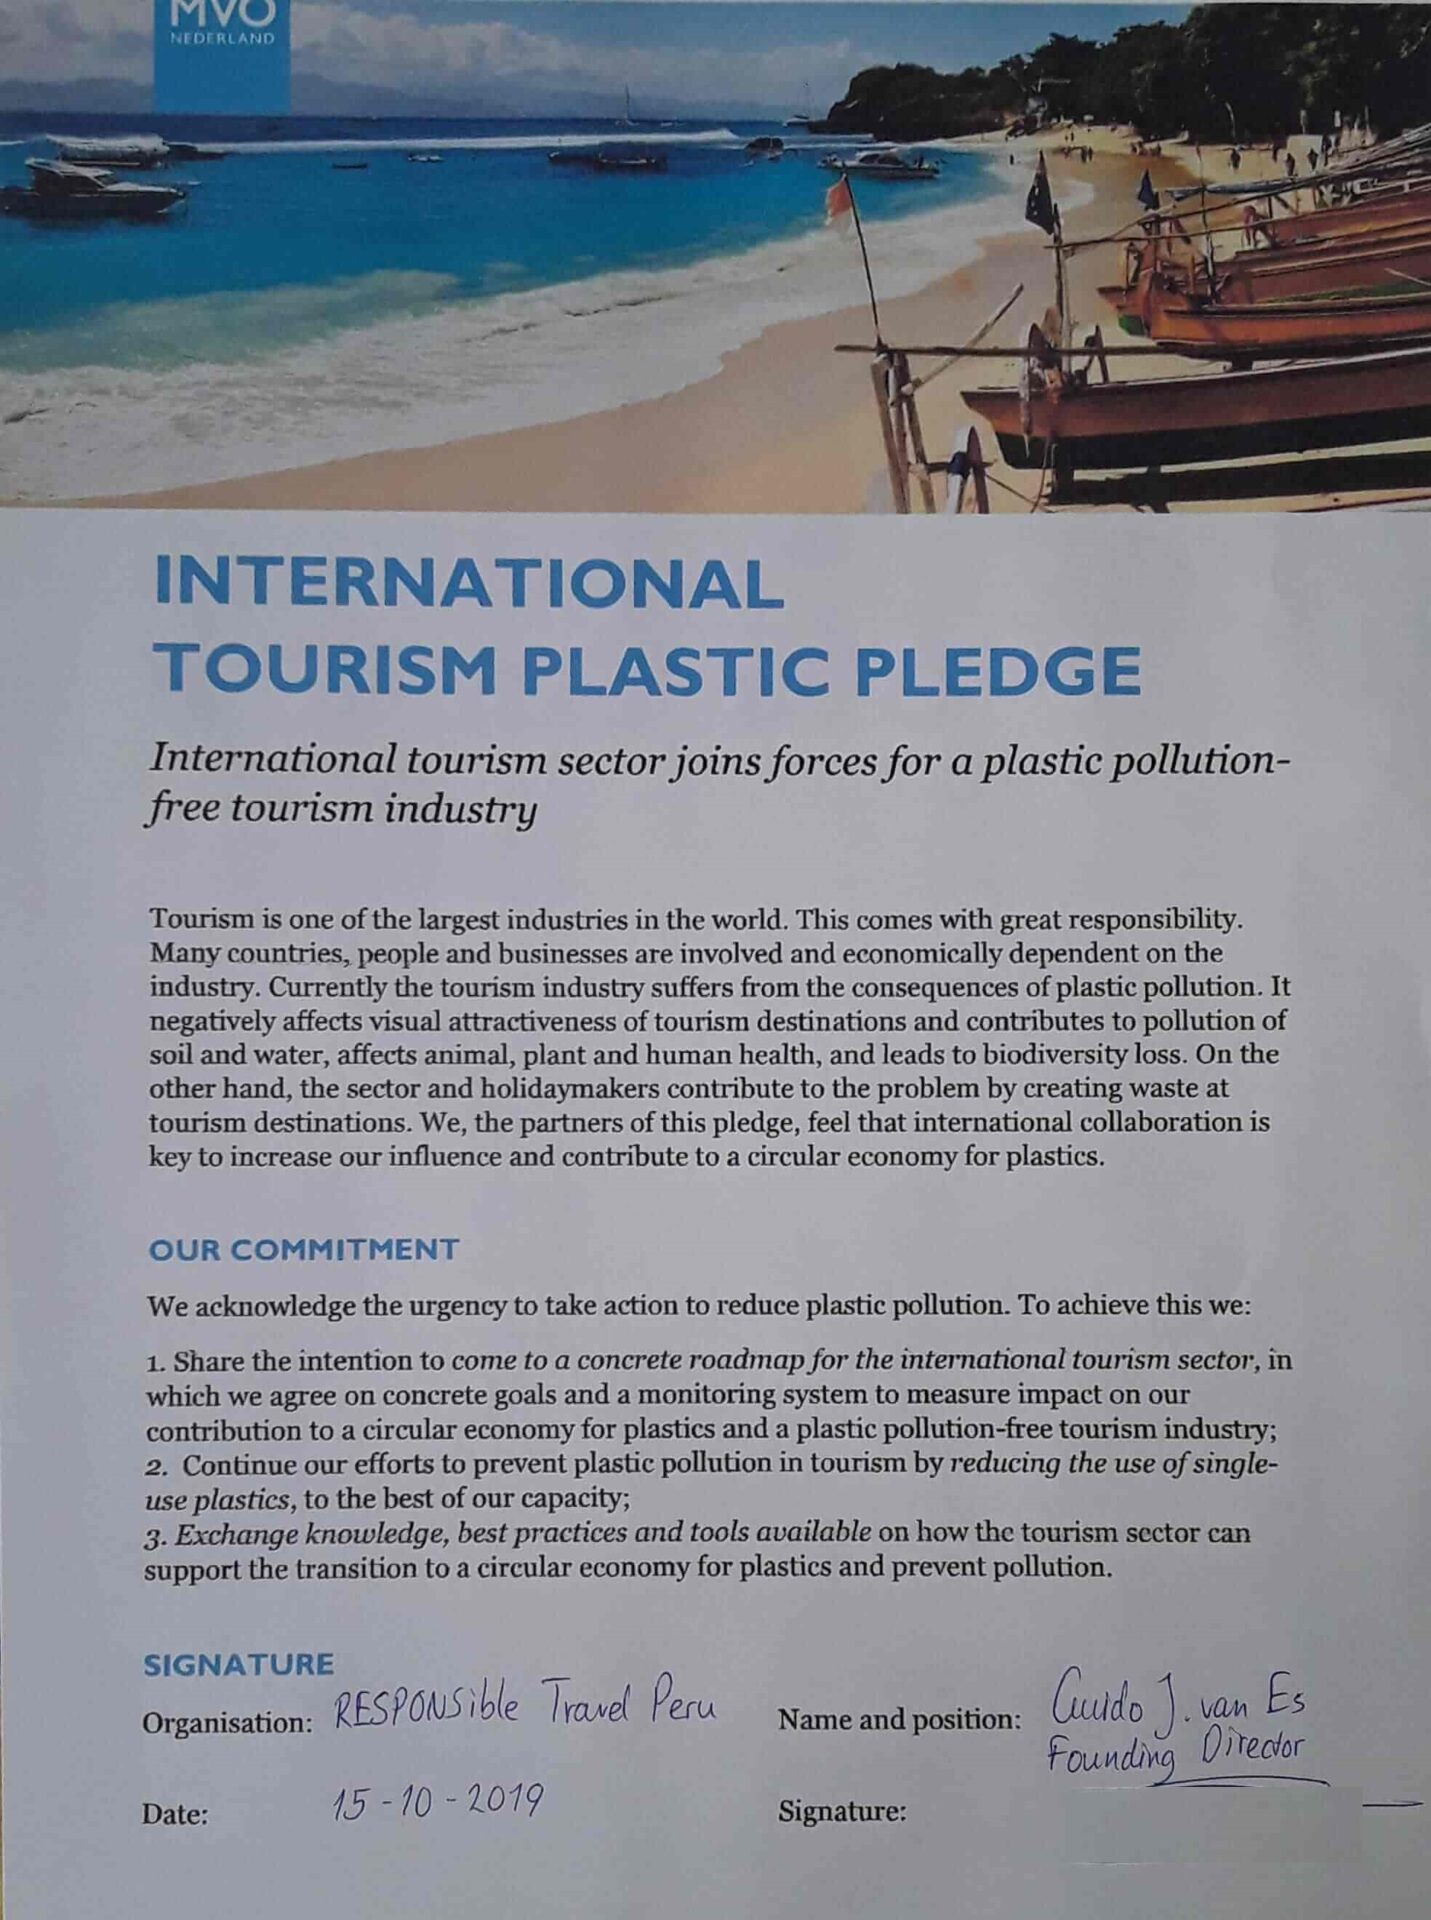 International Tourism Plastic Pledge. Sustainable tourism with RESPONSible Travel Peru.